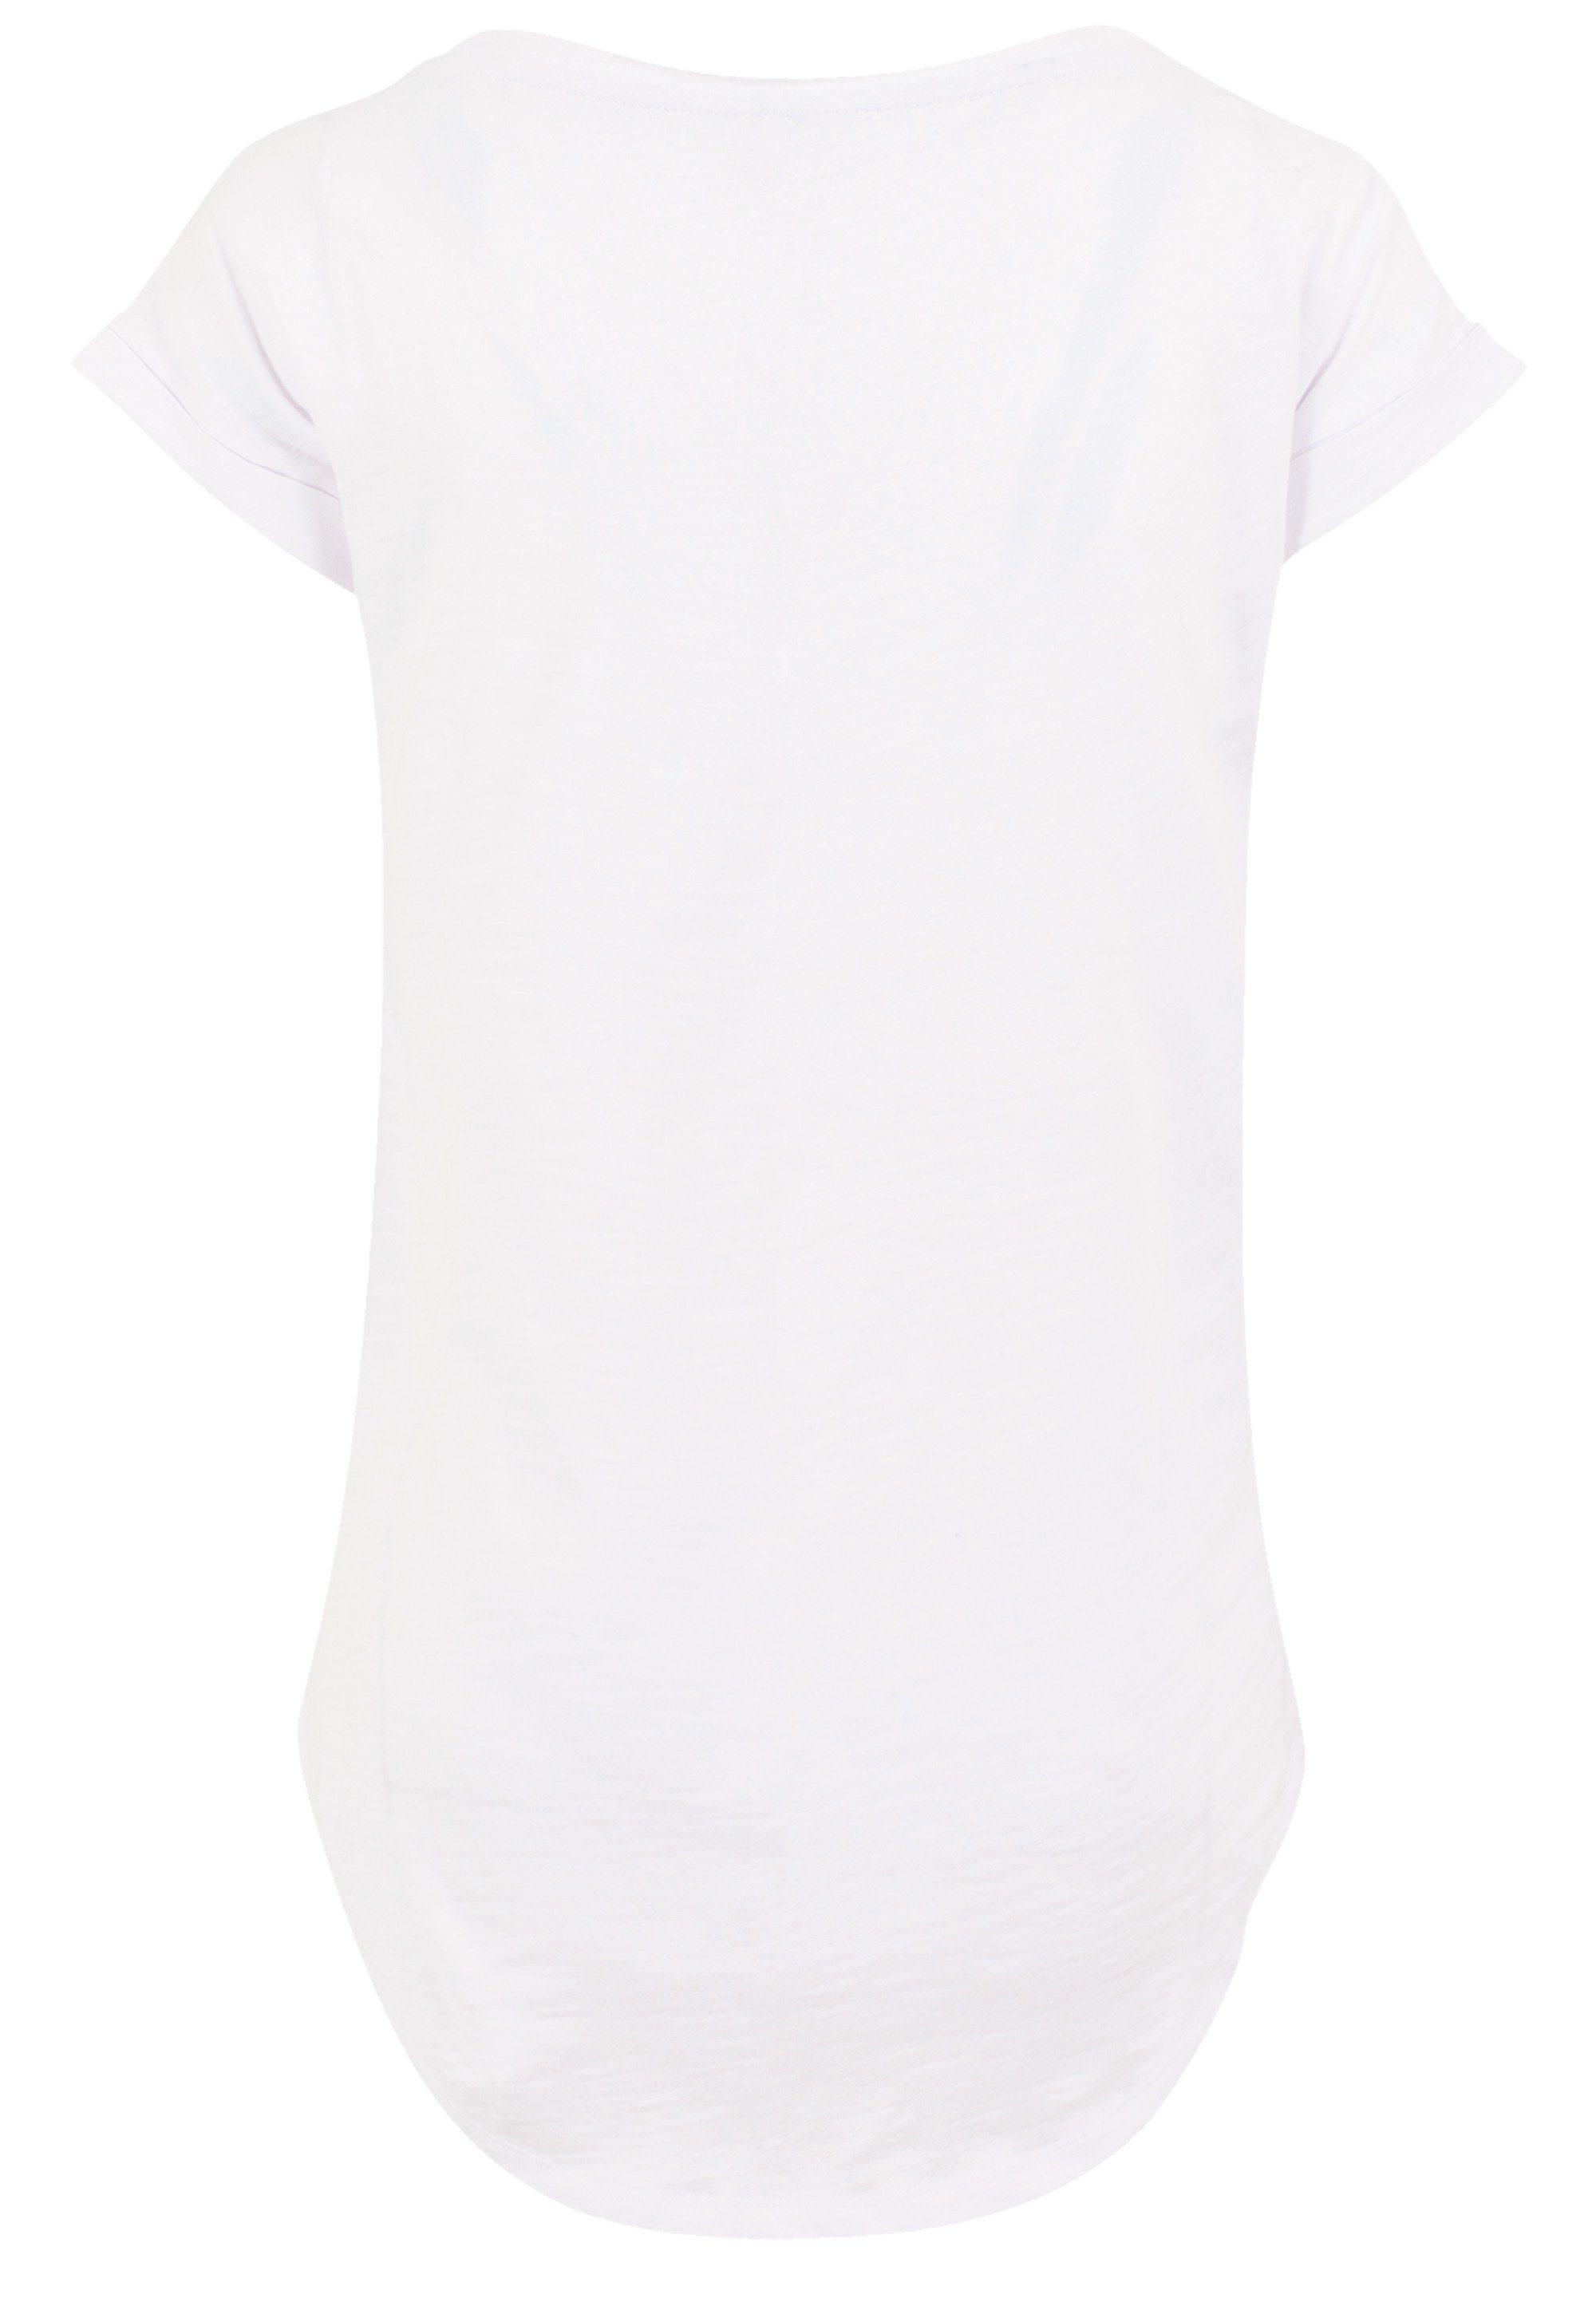 F4NT4STIC T-Shirt Star geschnittenes lang Vintage Premium Hinten Pride Wars extra Damen T-Shirt Qualität